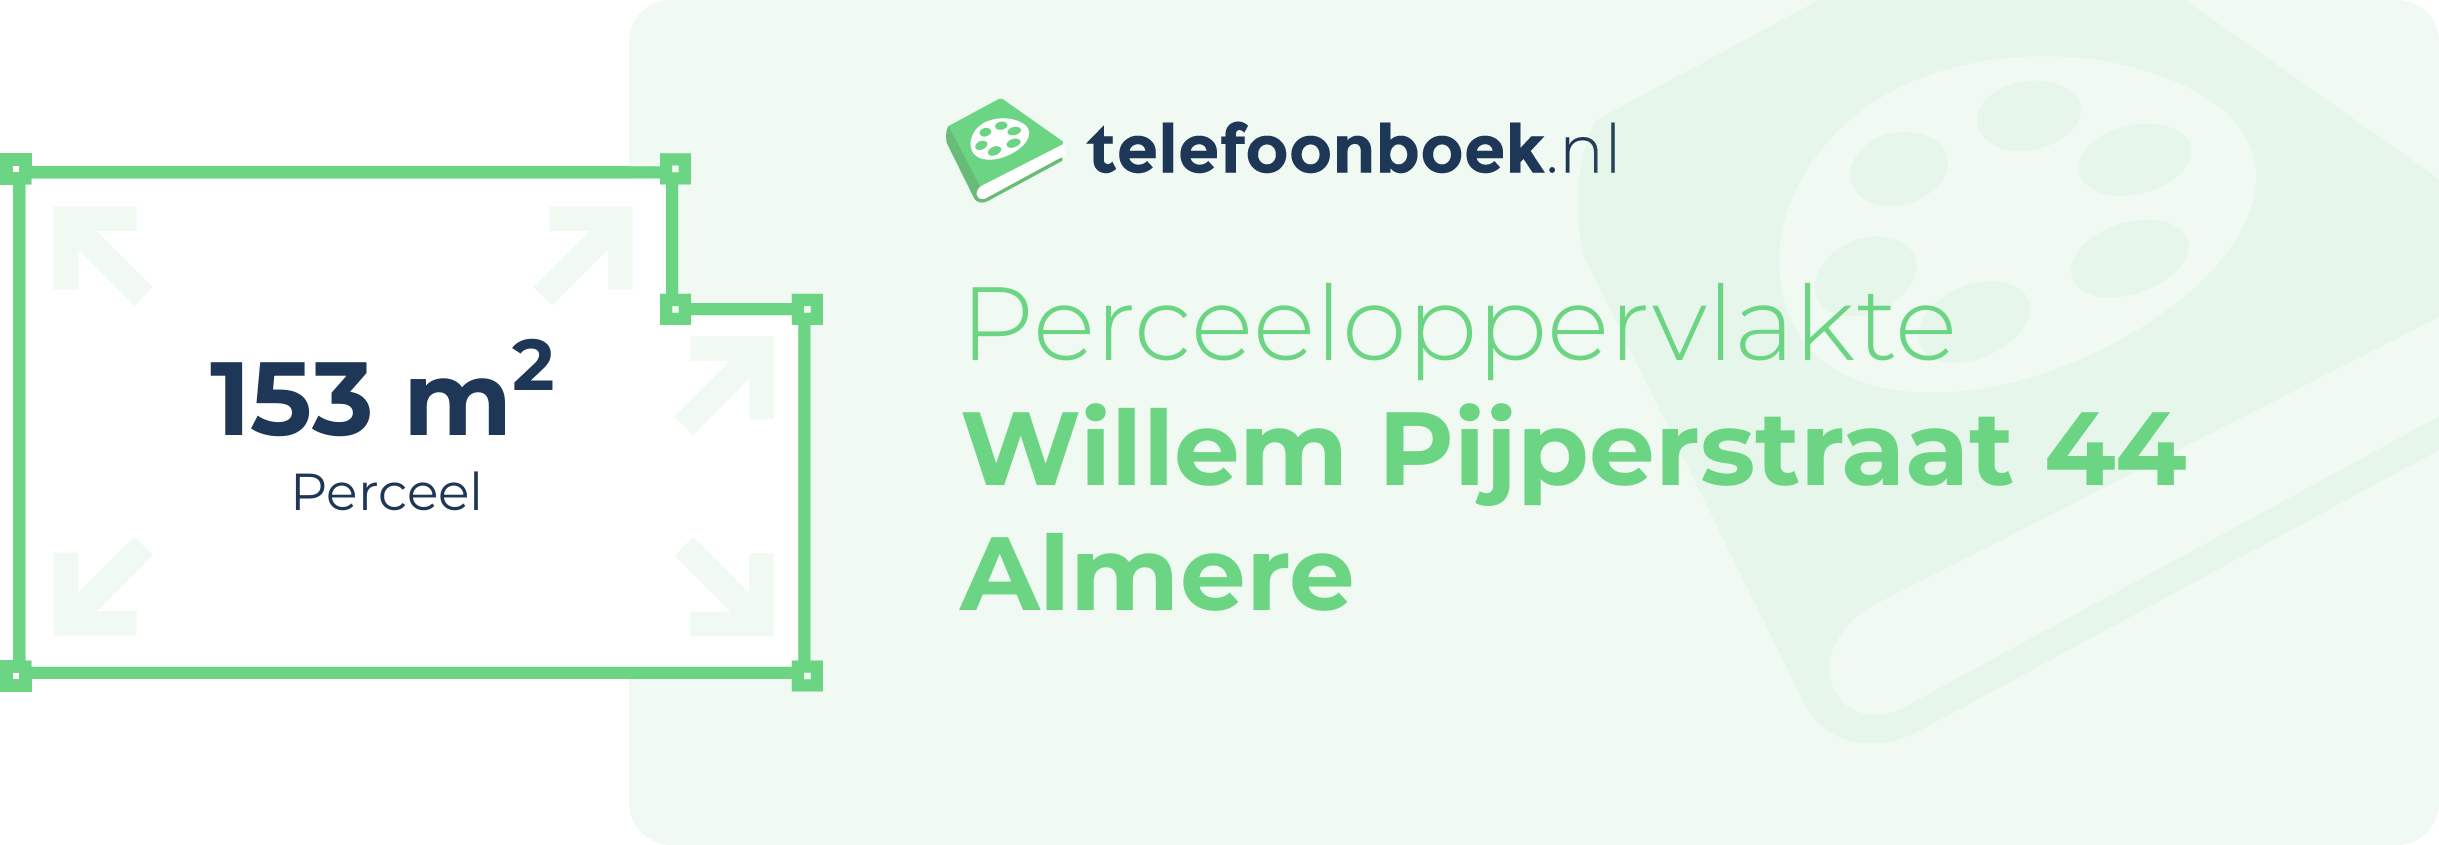 Perceeloppervlakte Willem Pijperstraat 44 Almere